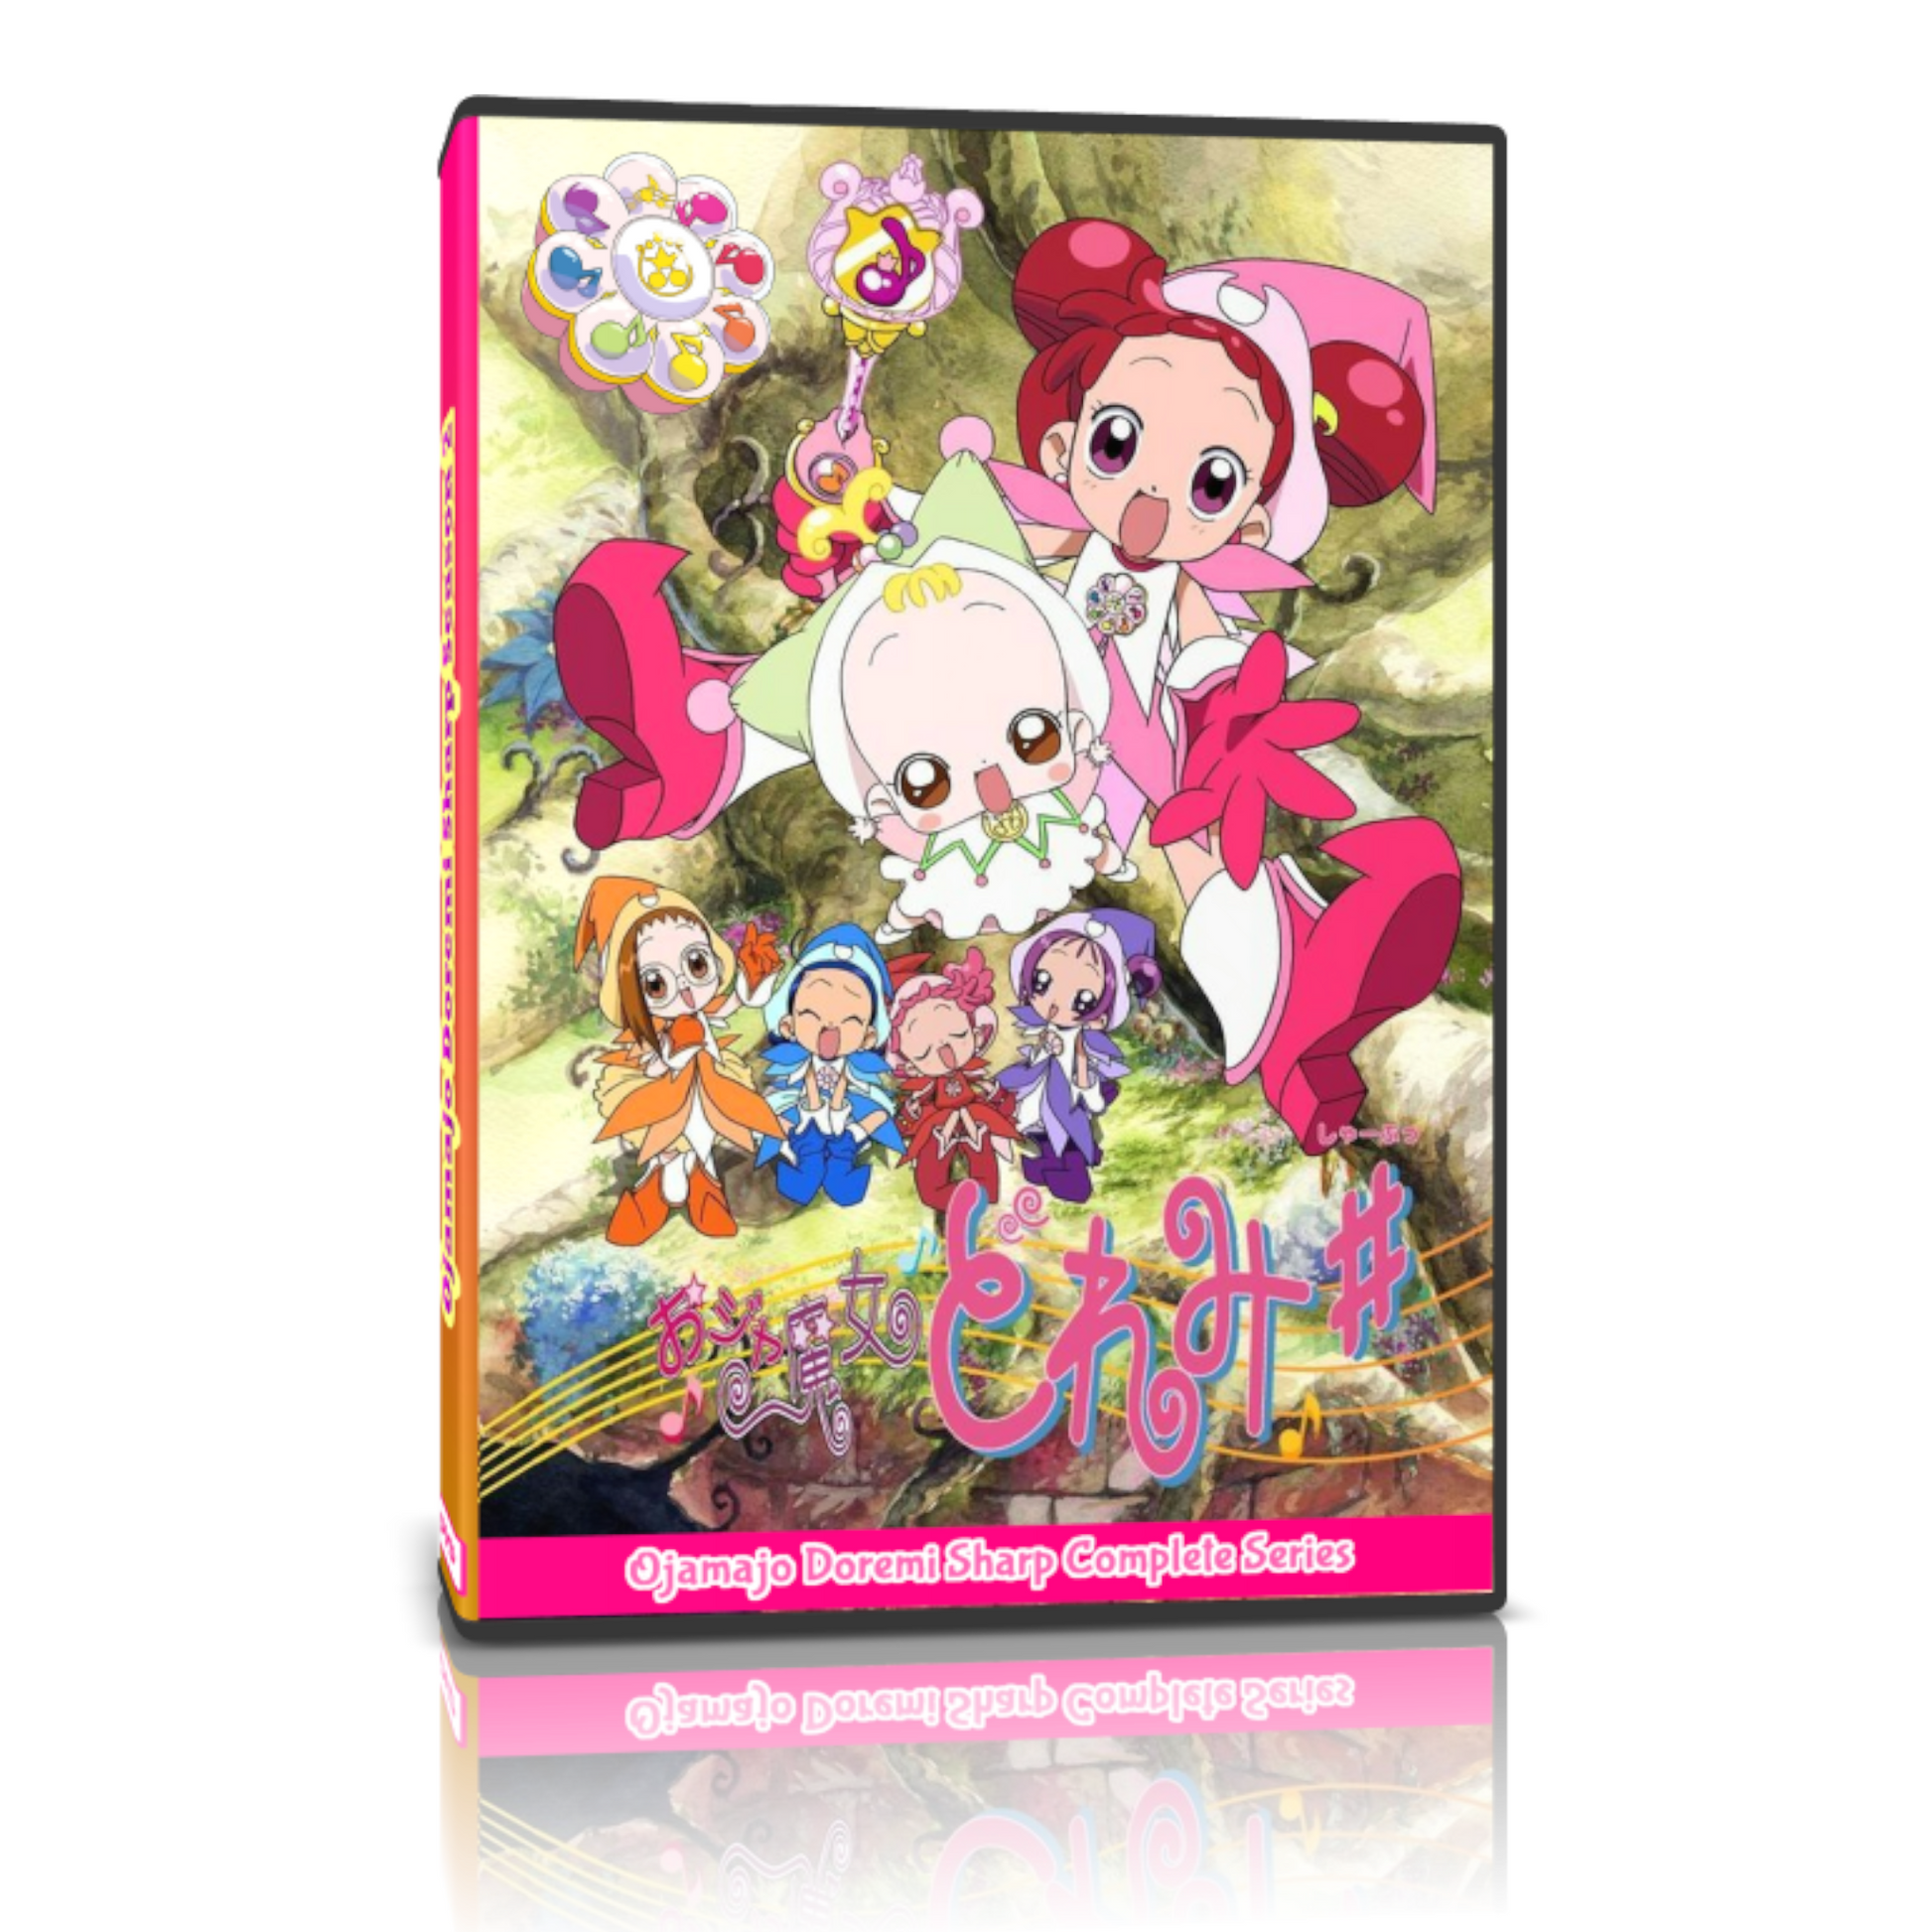  Kamisama Kiss S2 Collection [DVD] : Movies & TV